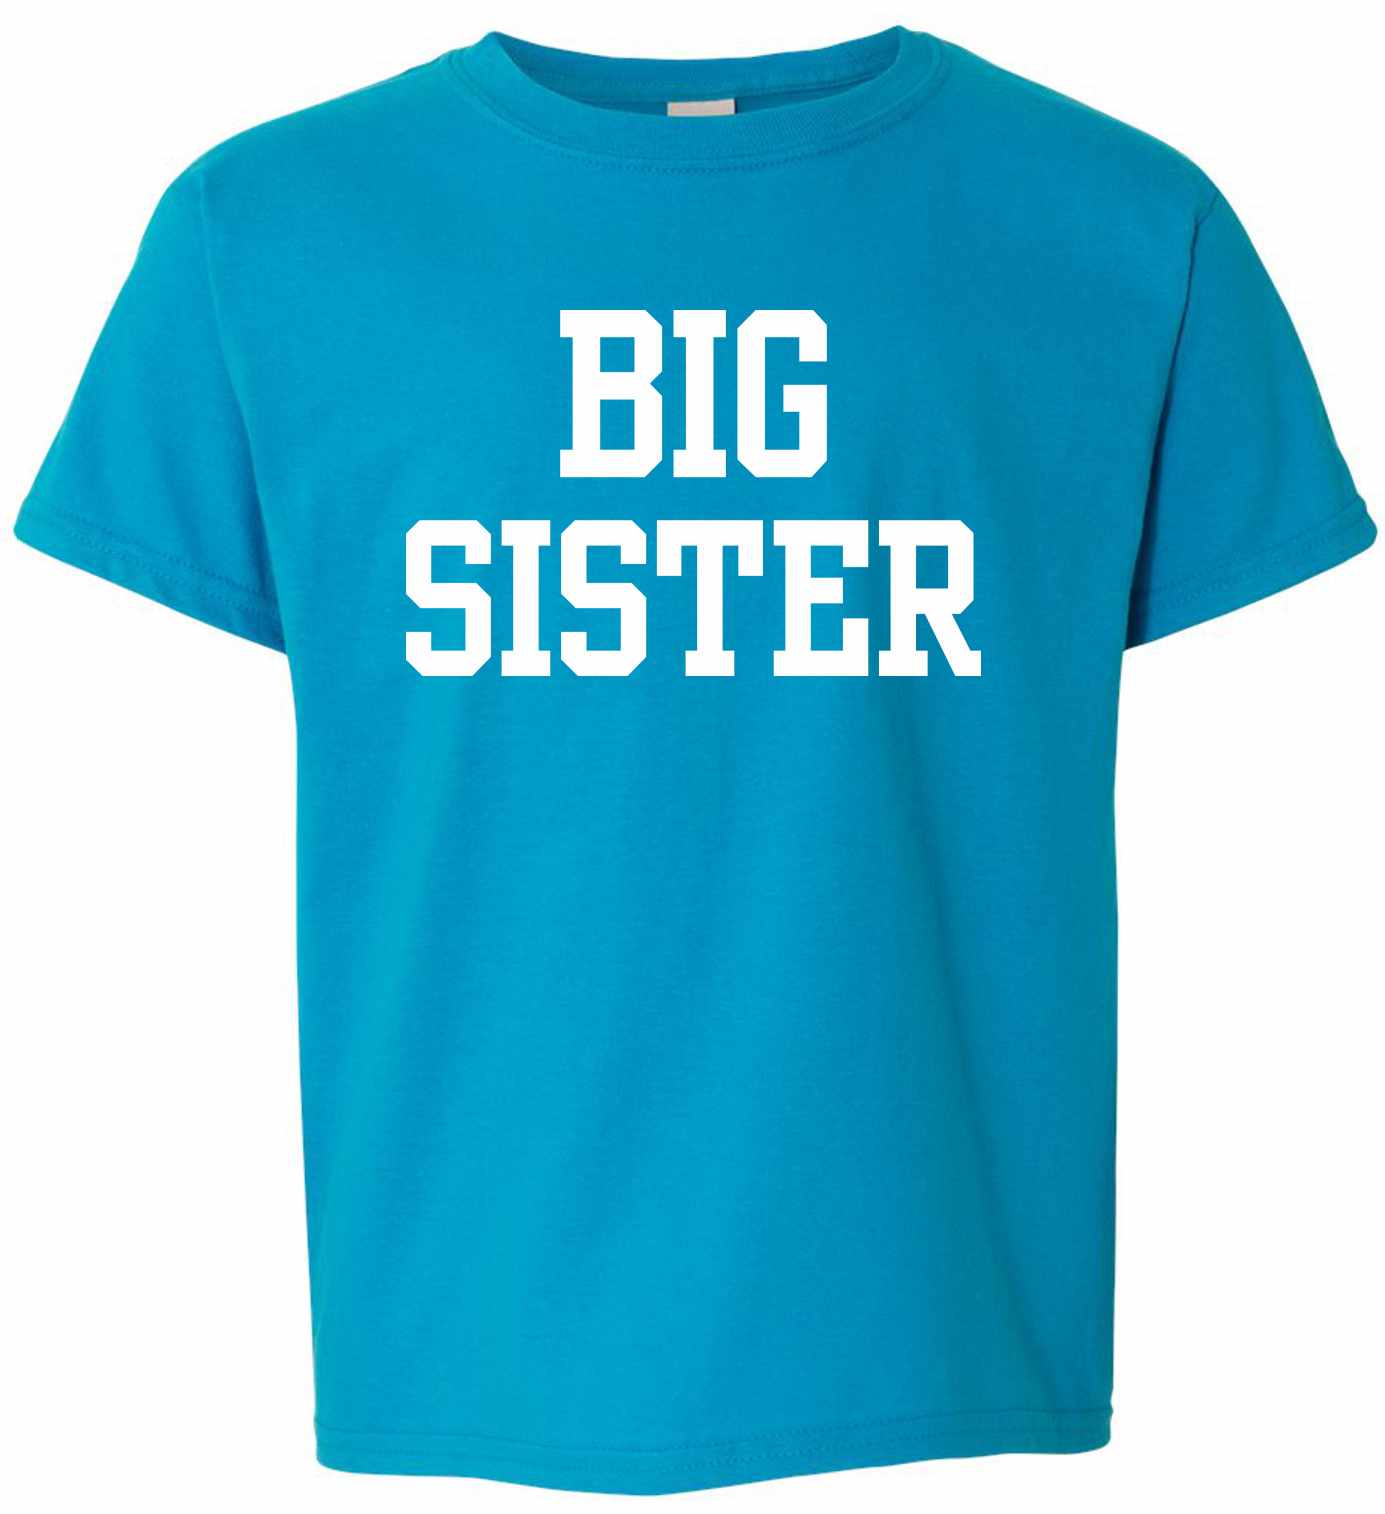 BIG SISTER on Youth T-Shirt